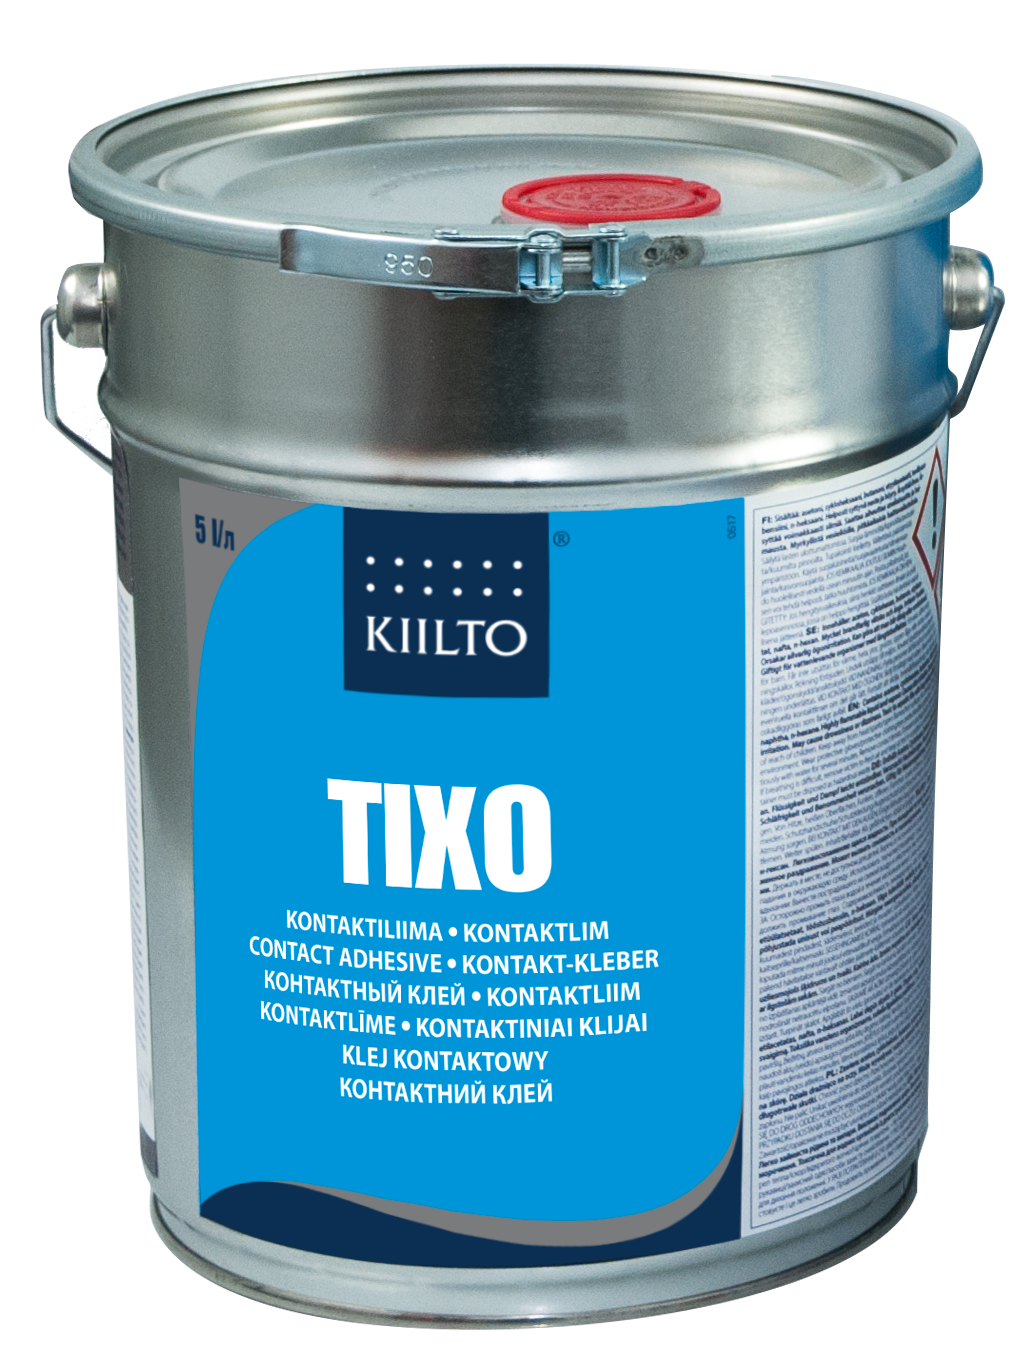 kontaktiliima-tixo-50ml-kiilto-rauta-juurikkala